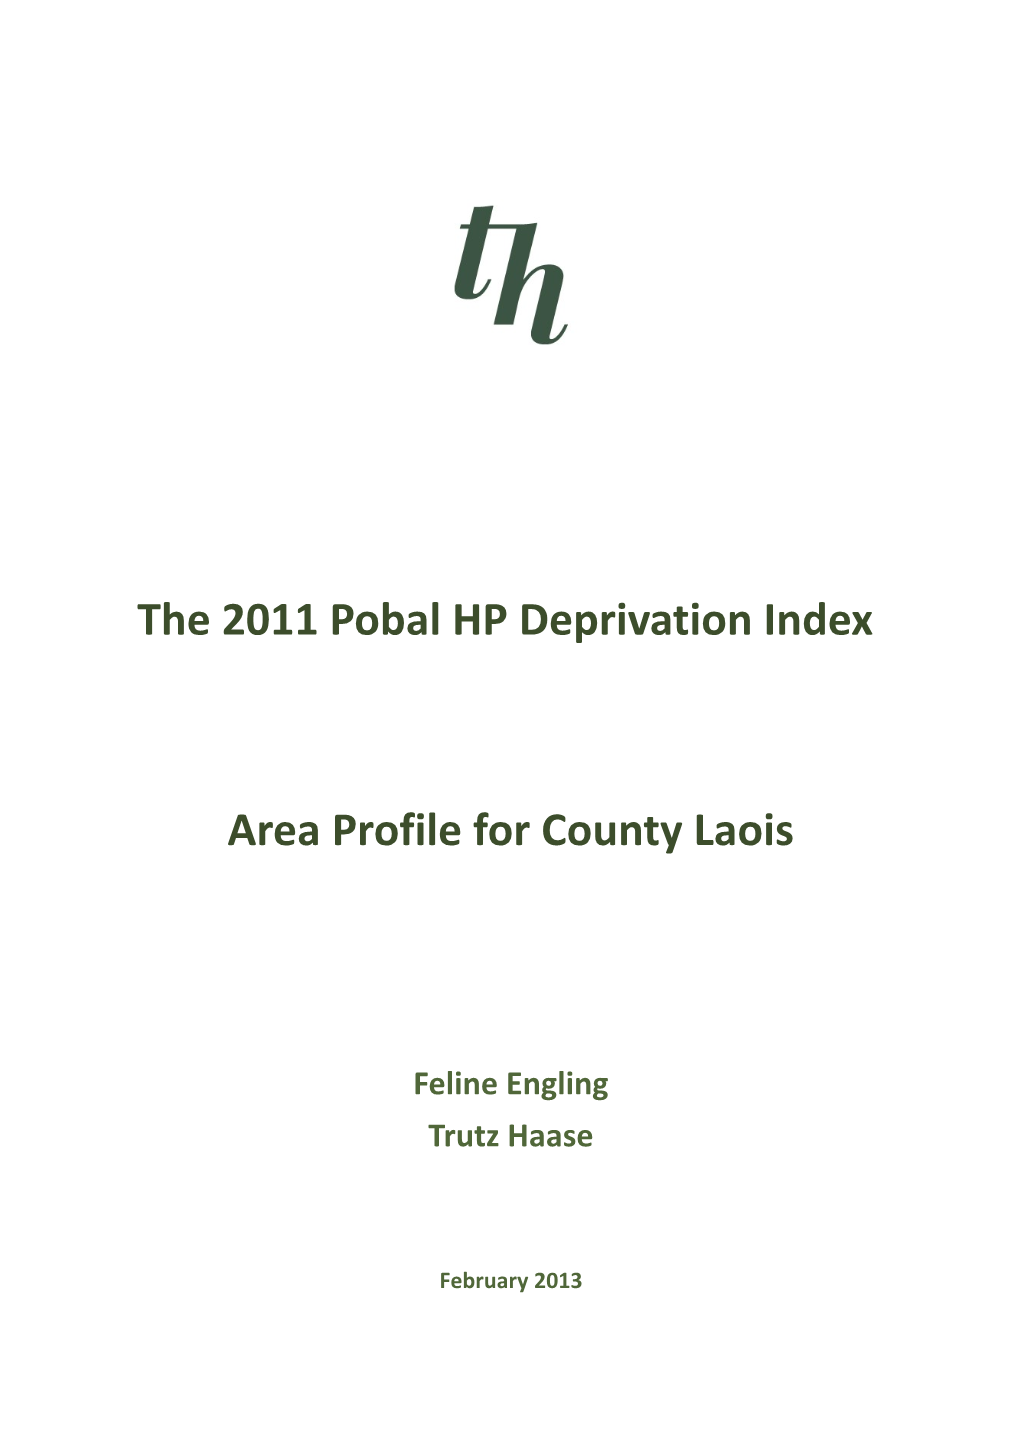 Area Profile for County Laois